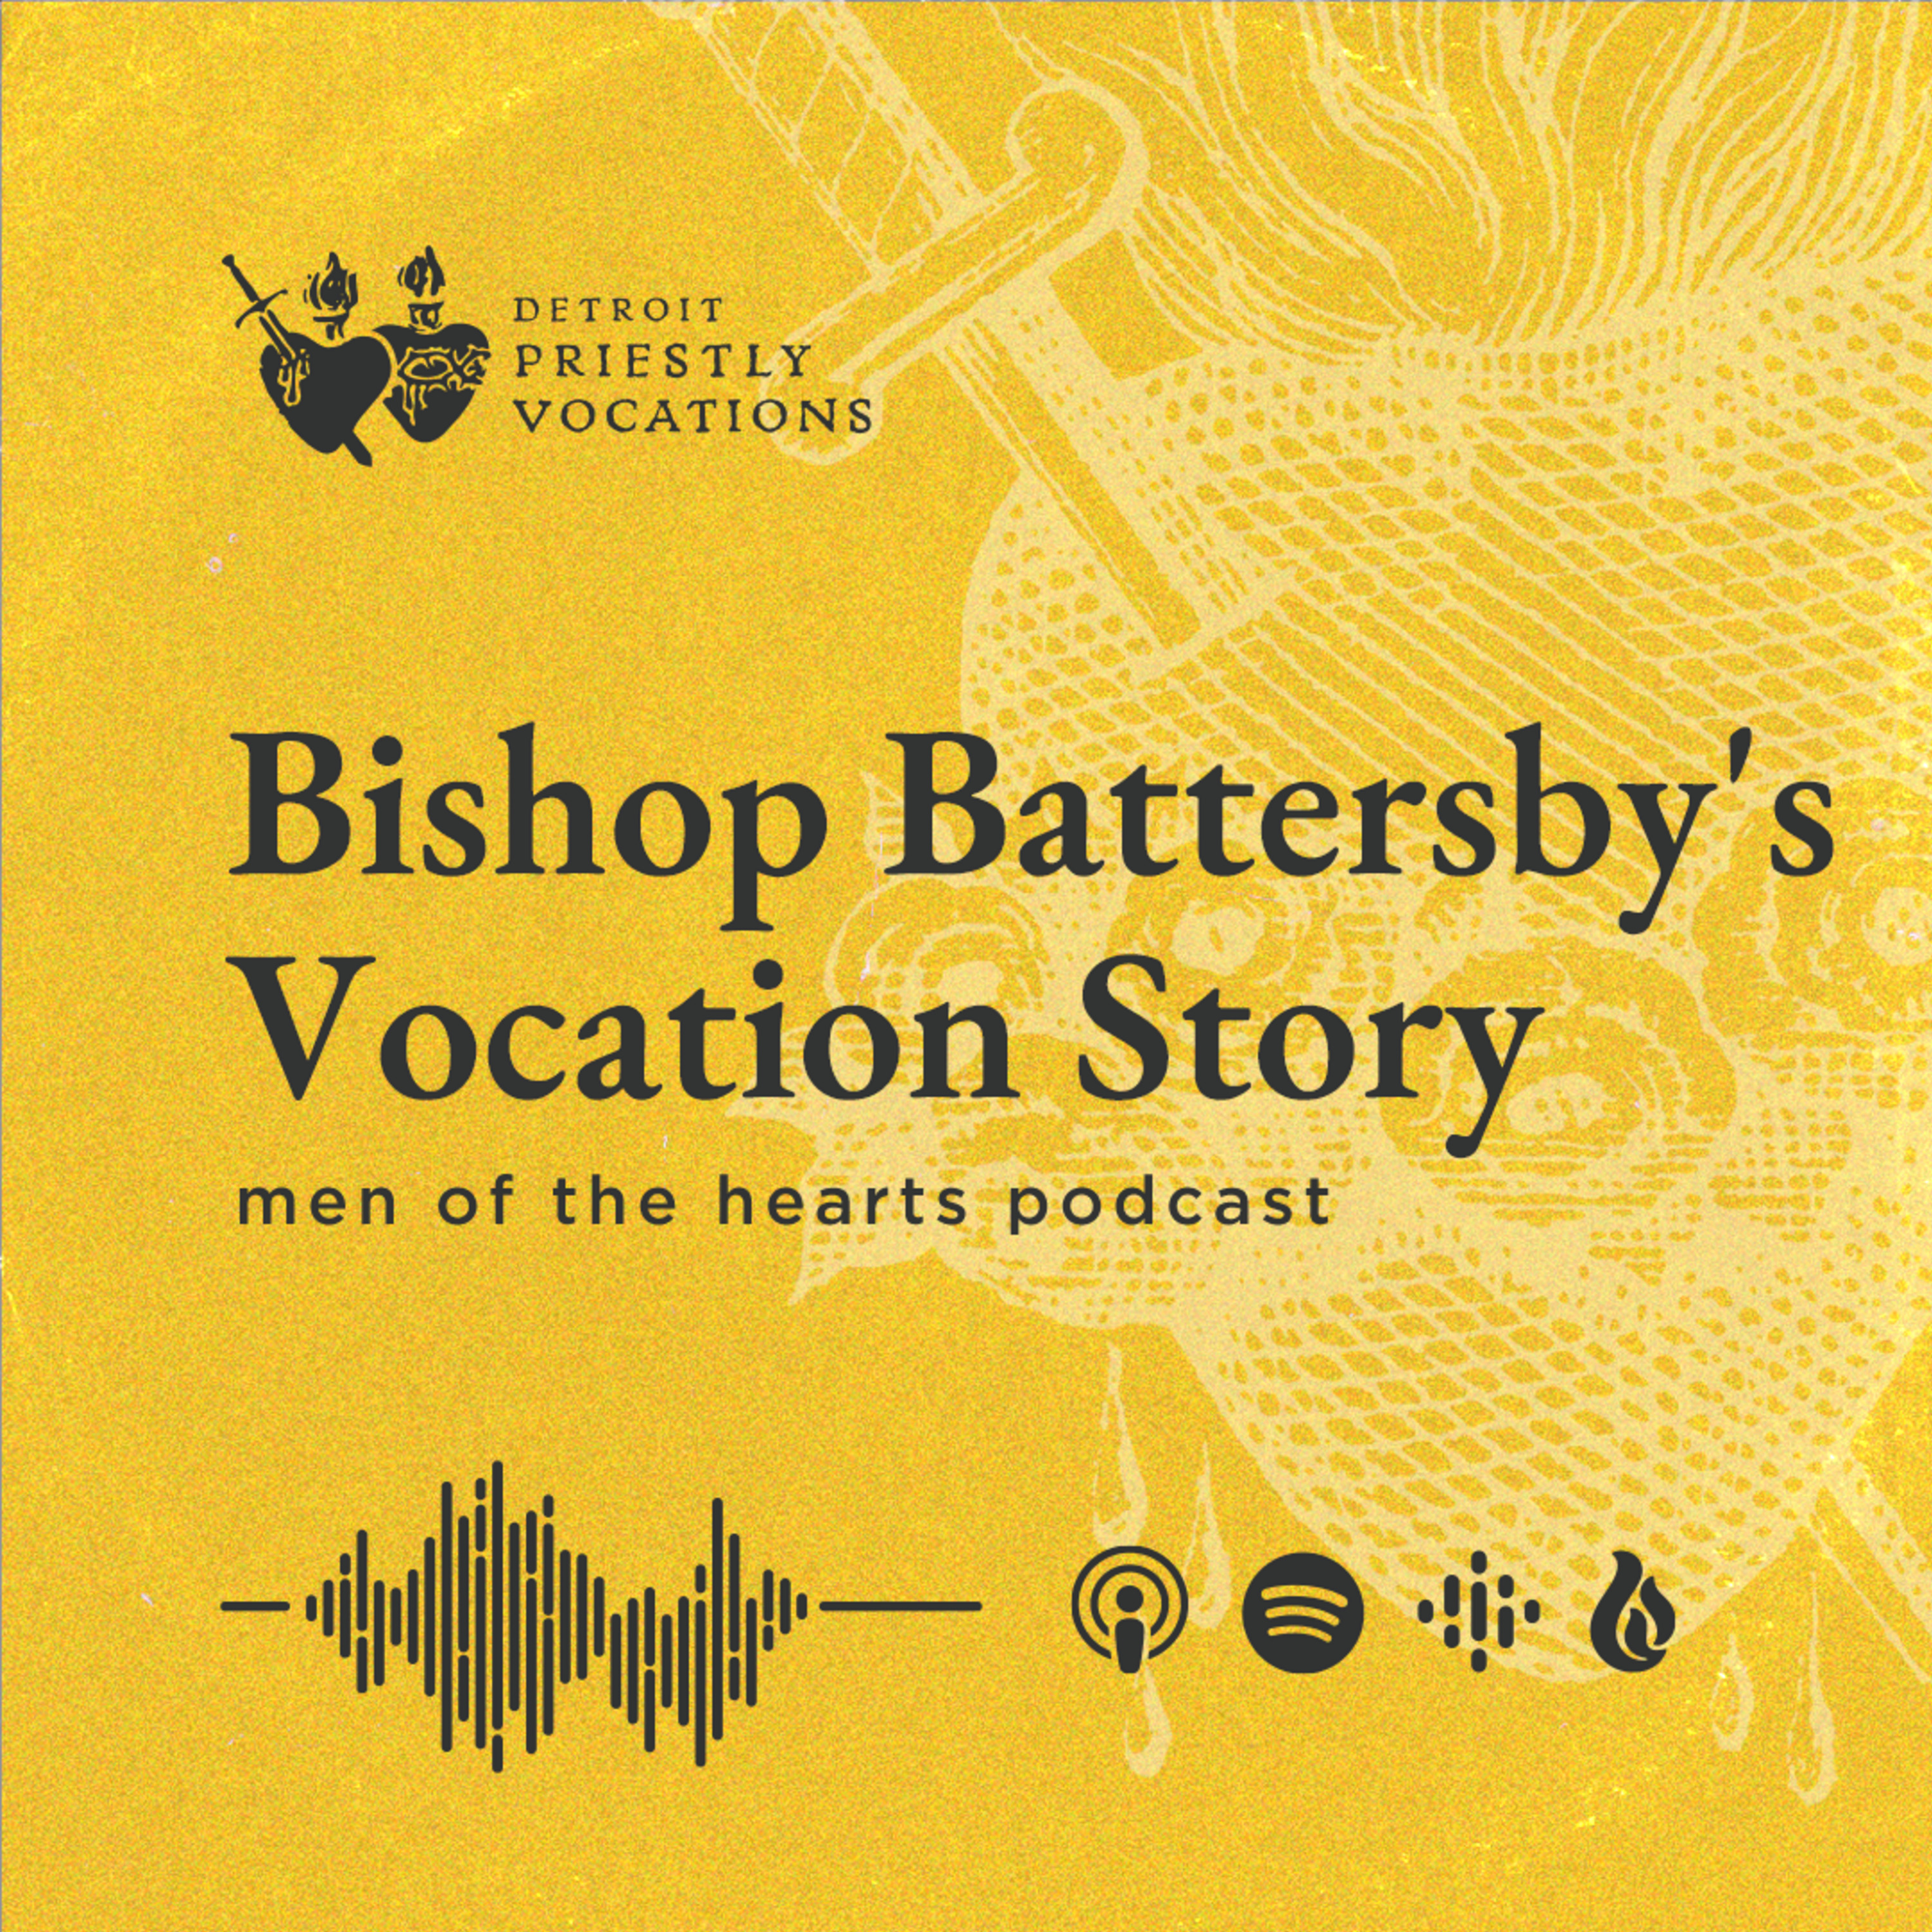 Bishop Battersby's Vocation Story